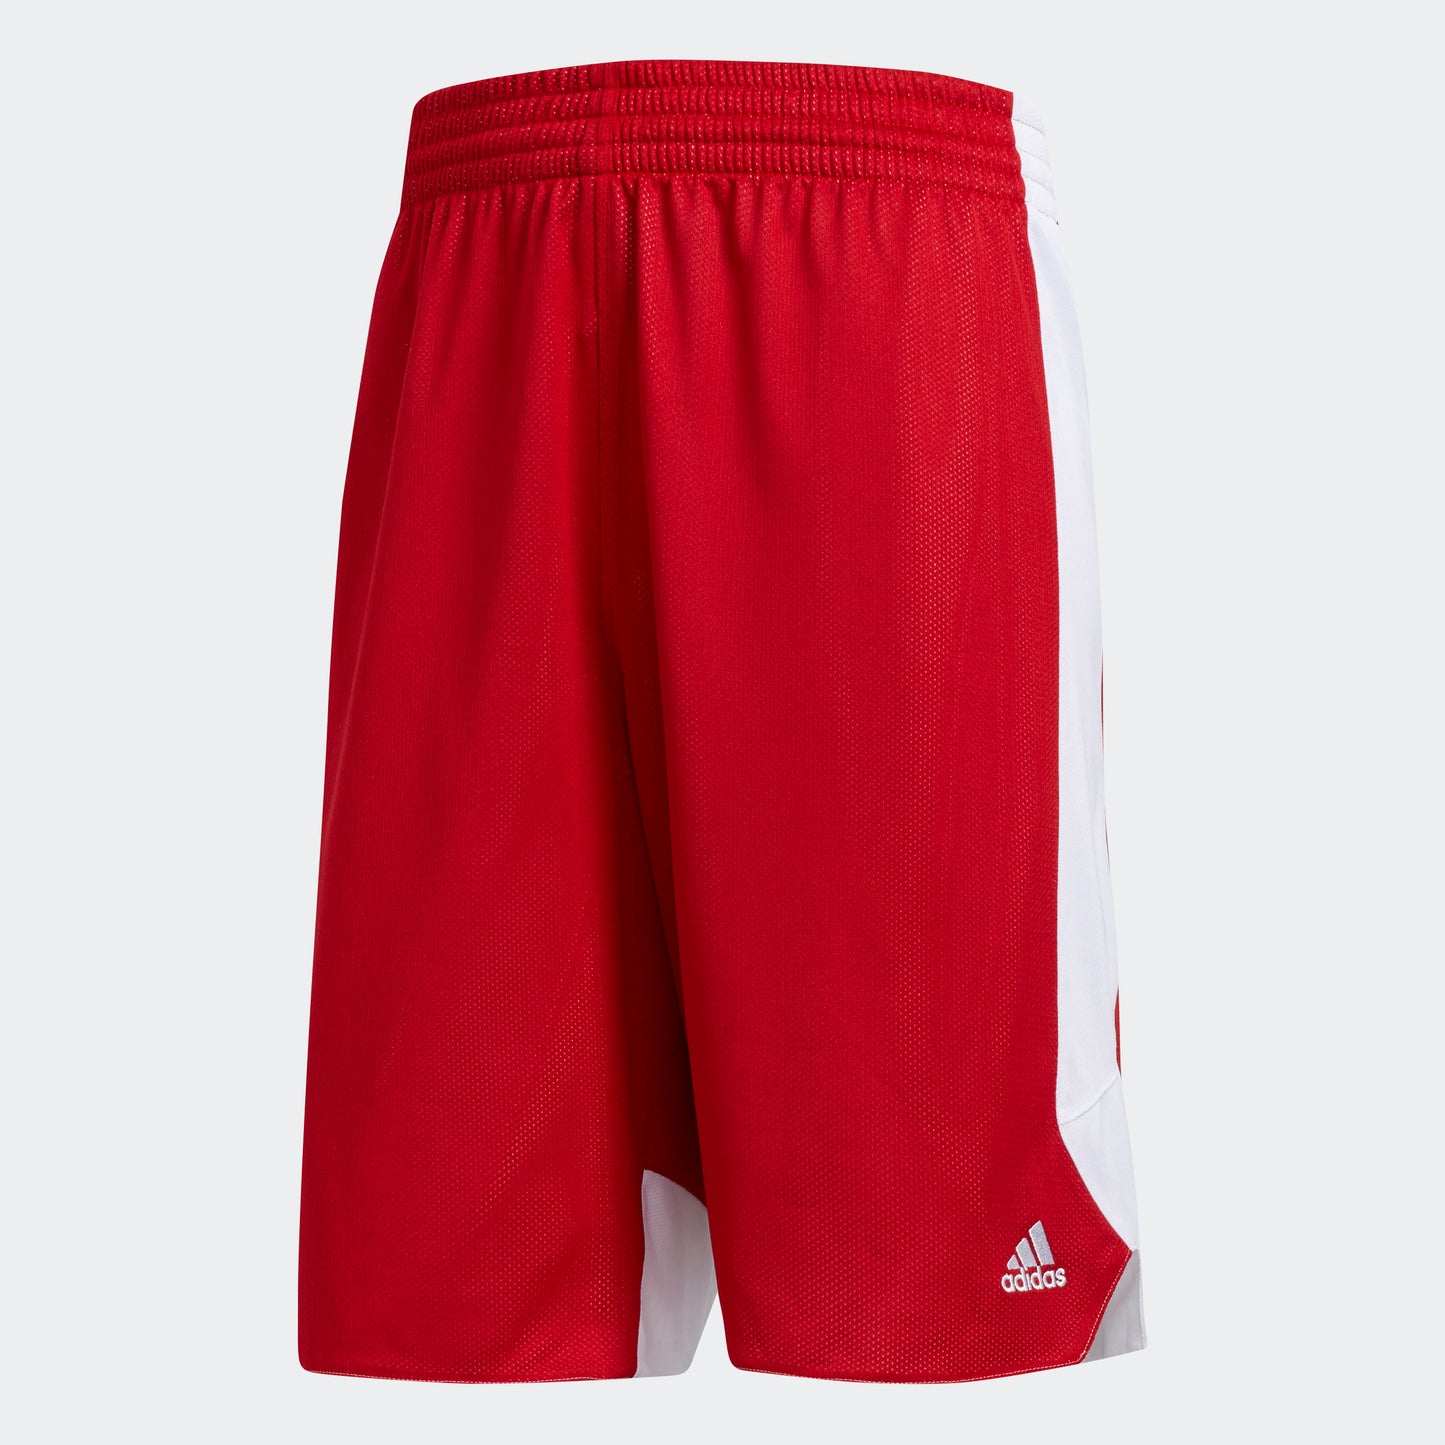 adidas REVERSIBLE CRAZY EXPLOSIVE Shorts | Power Red-White | Men's